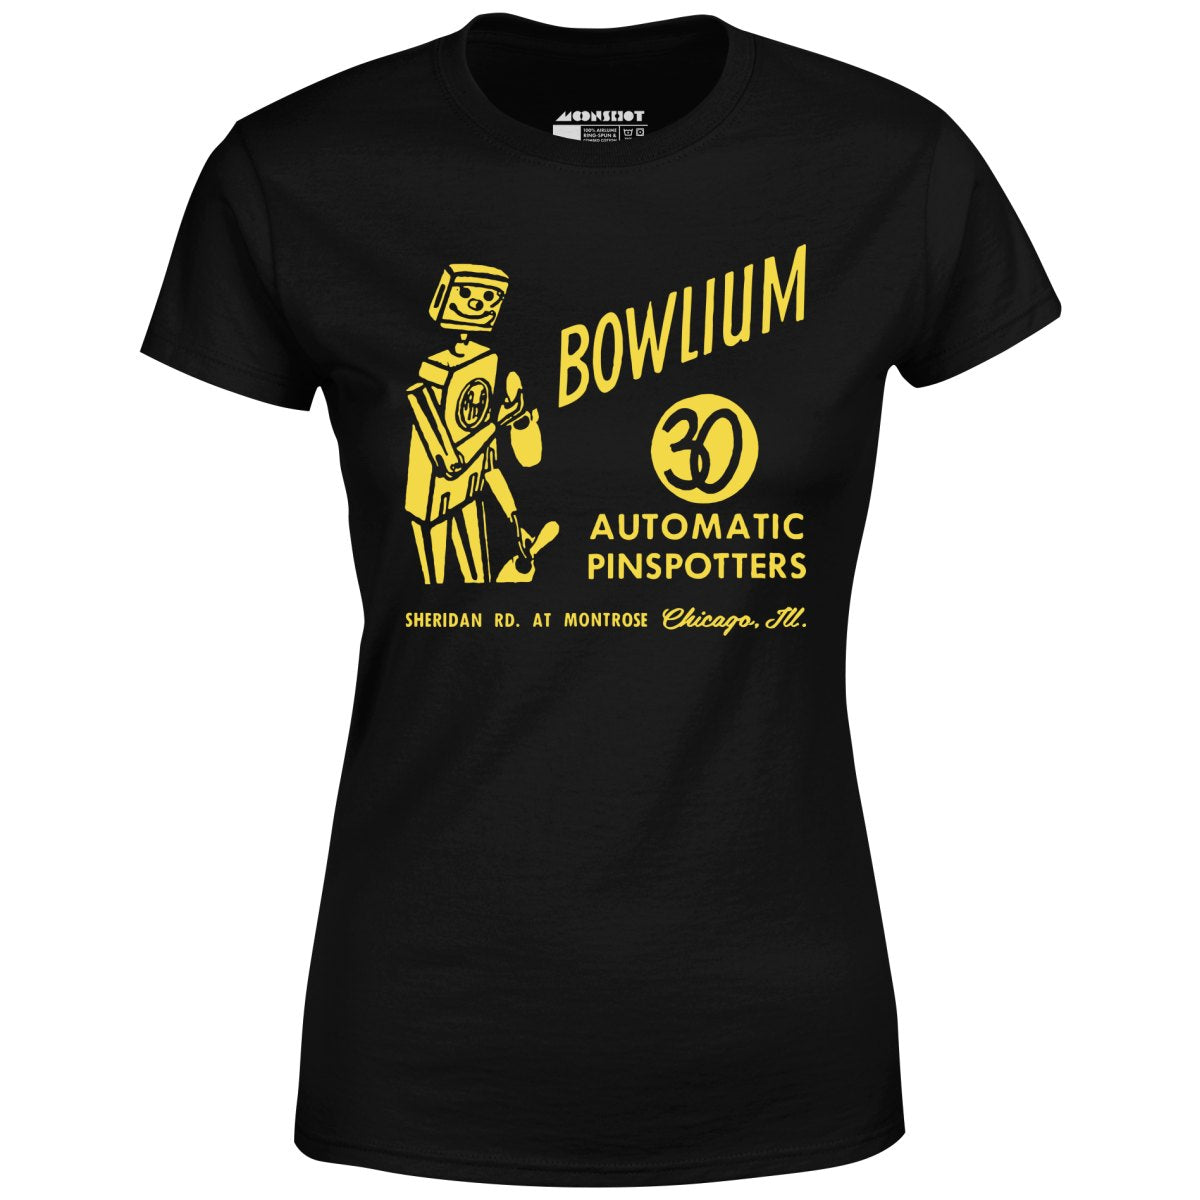 Bowlium v2 - Chicago, IL - Vintage Bowling Alley - Women's T-Shirt